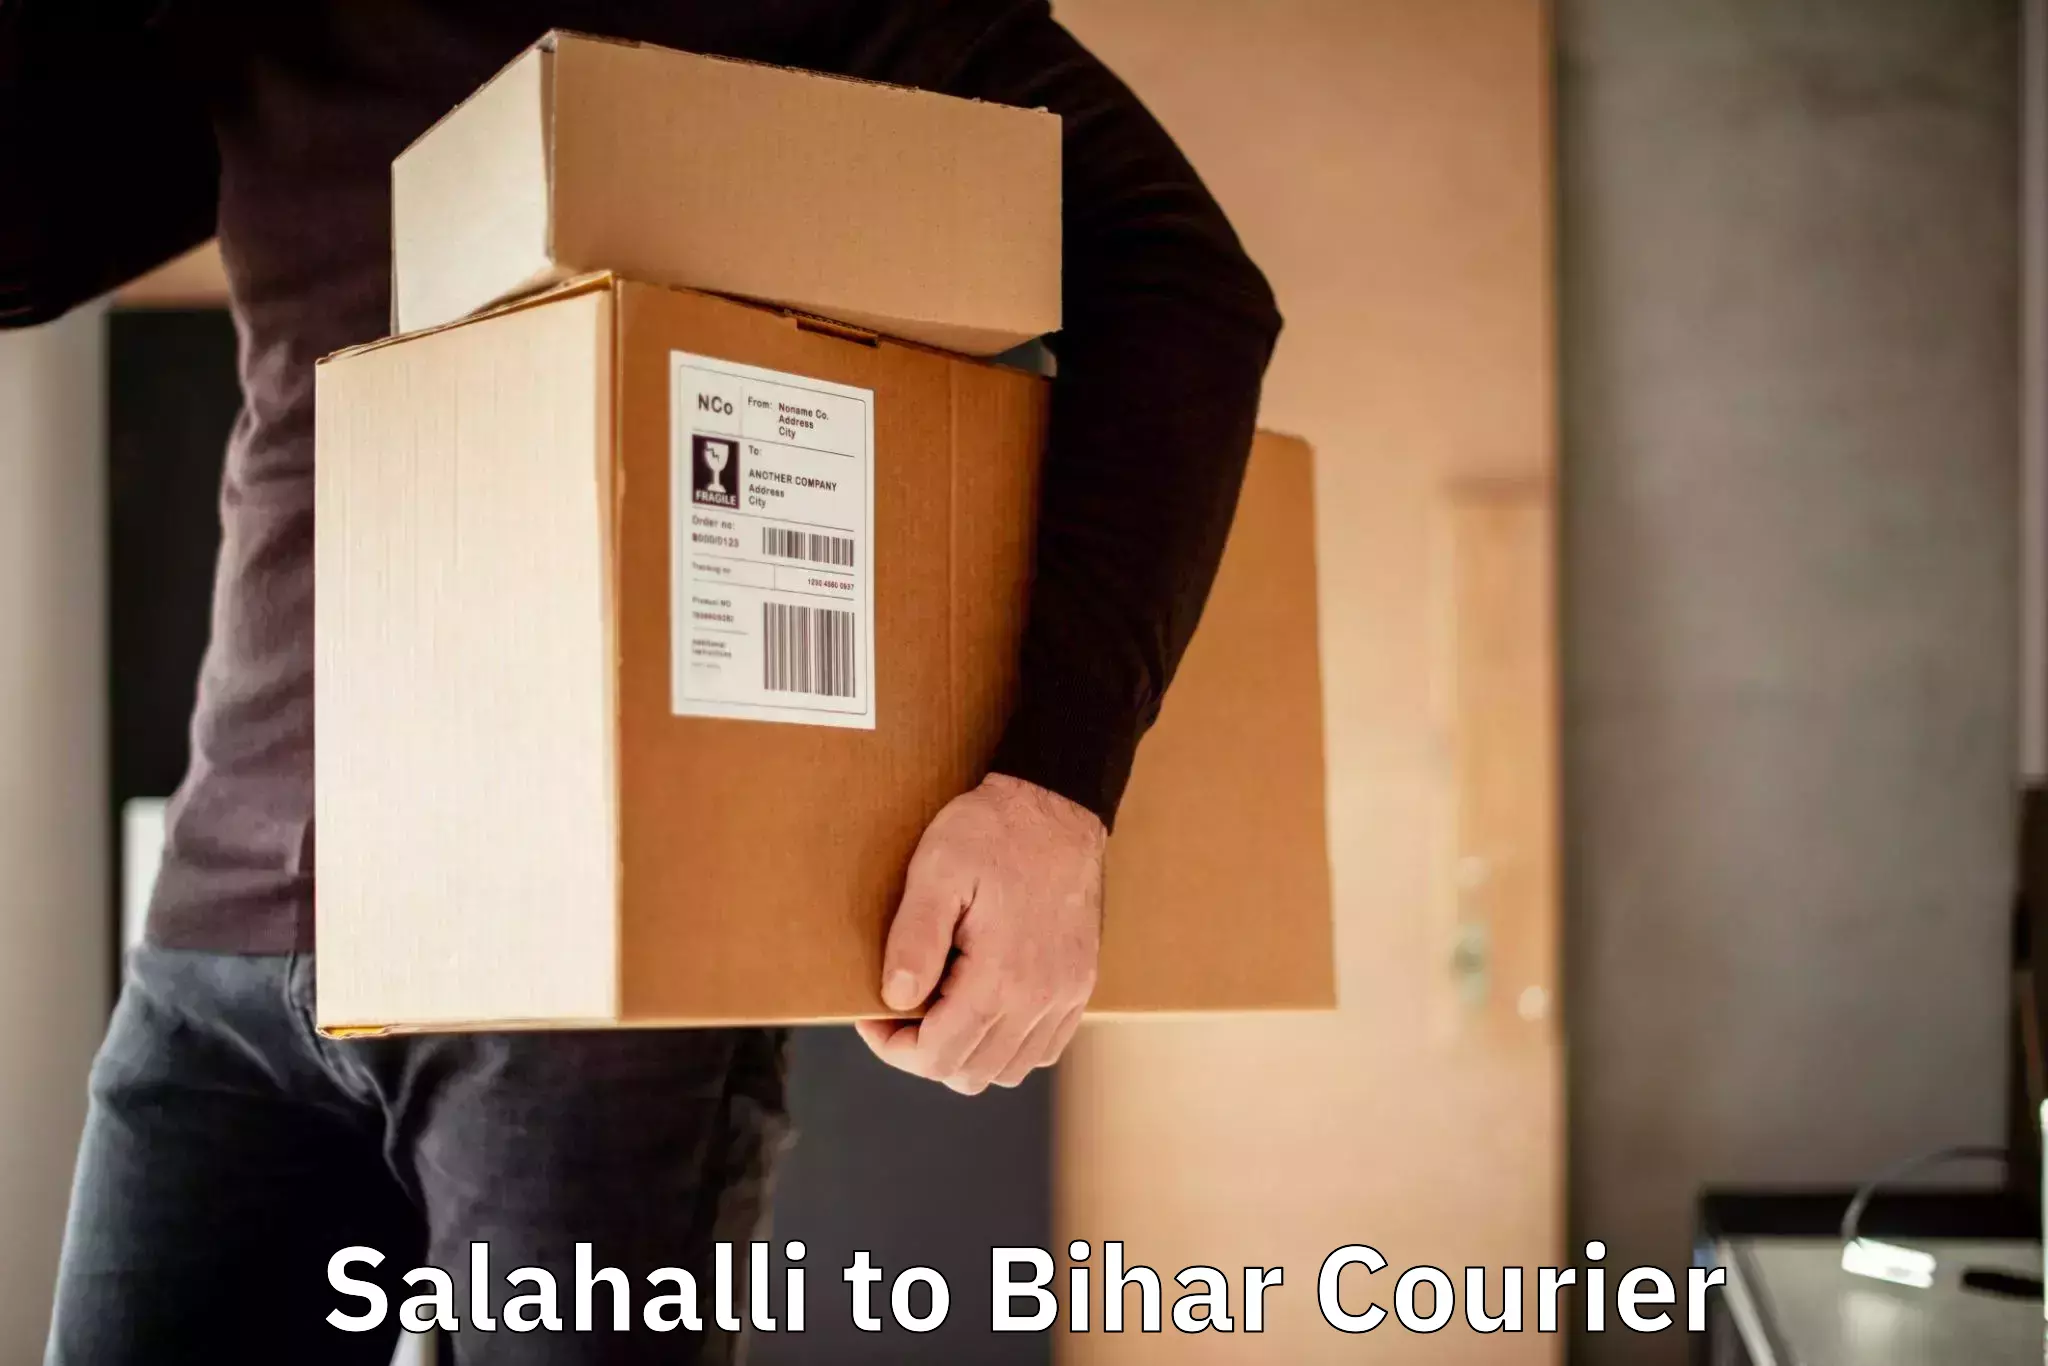 Courier service comparison Salahalli to Rajpur